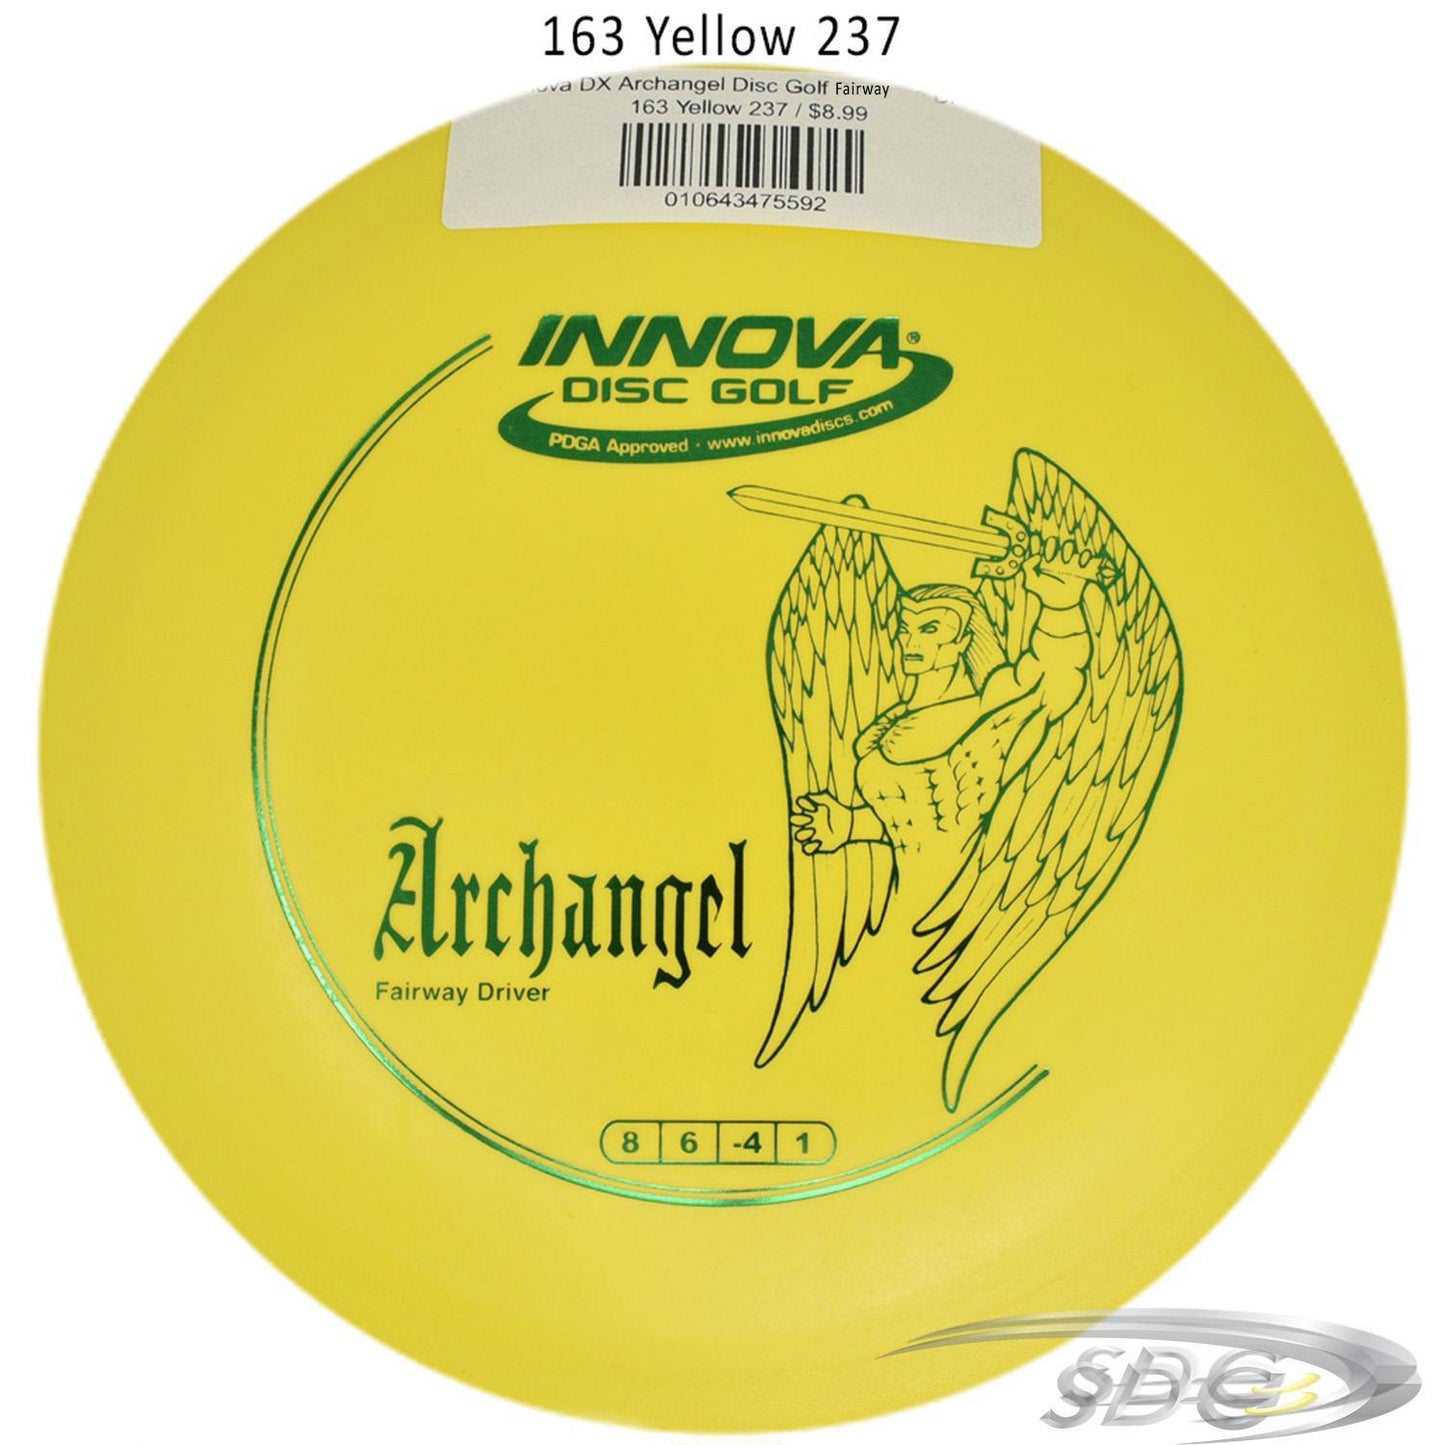 innova-dx-archangel-disc-golf-fairway-driver 163 Yellow 237 